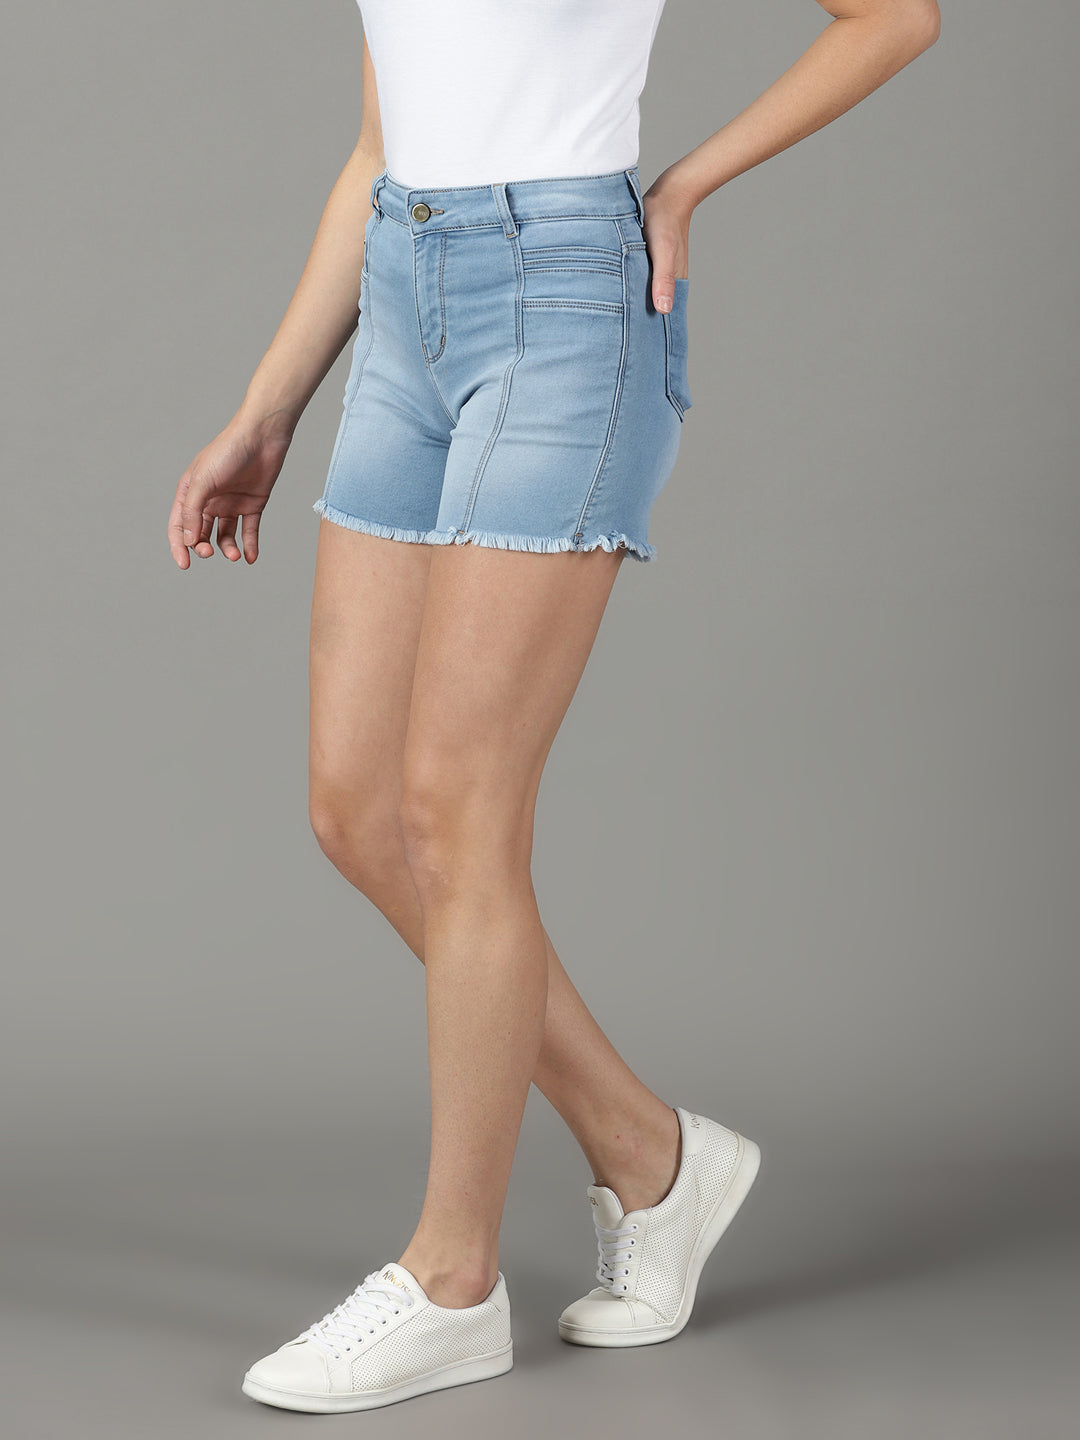 Women's Blue Solid Denim Shorts